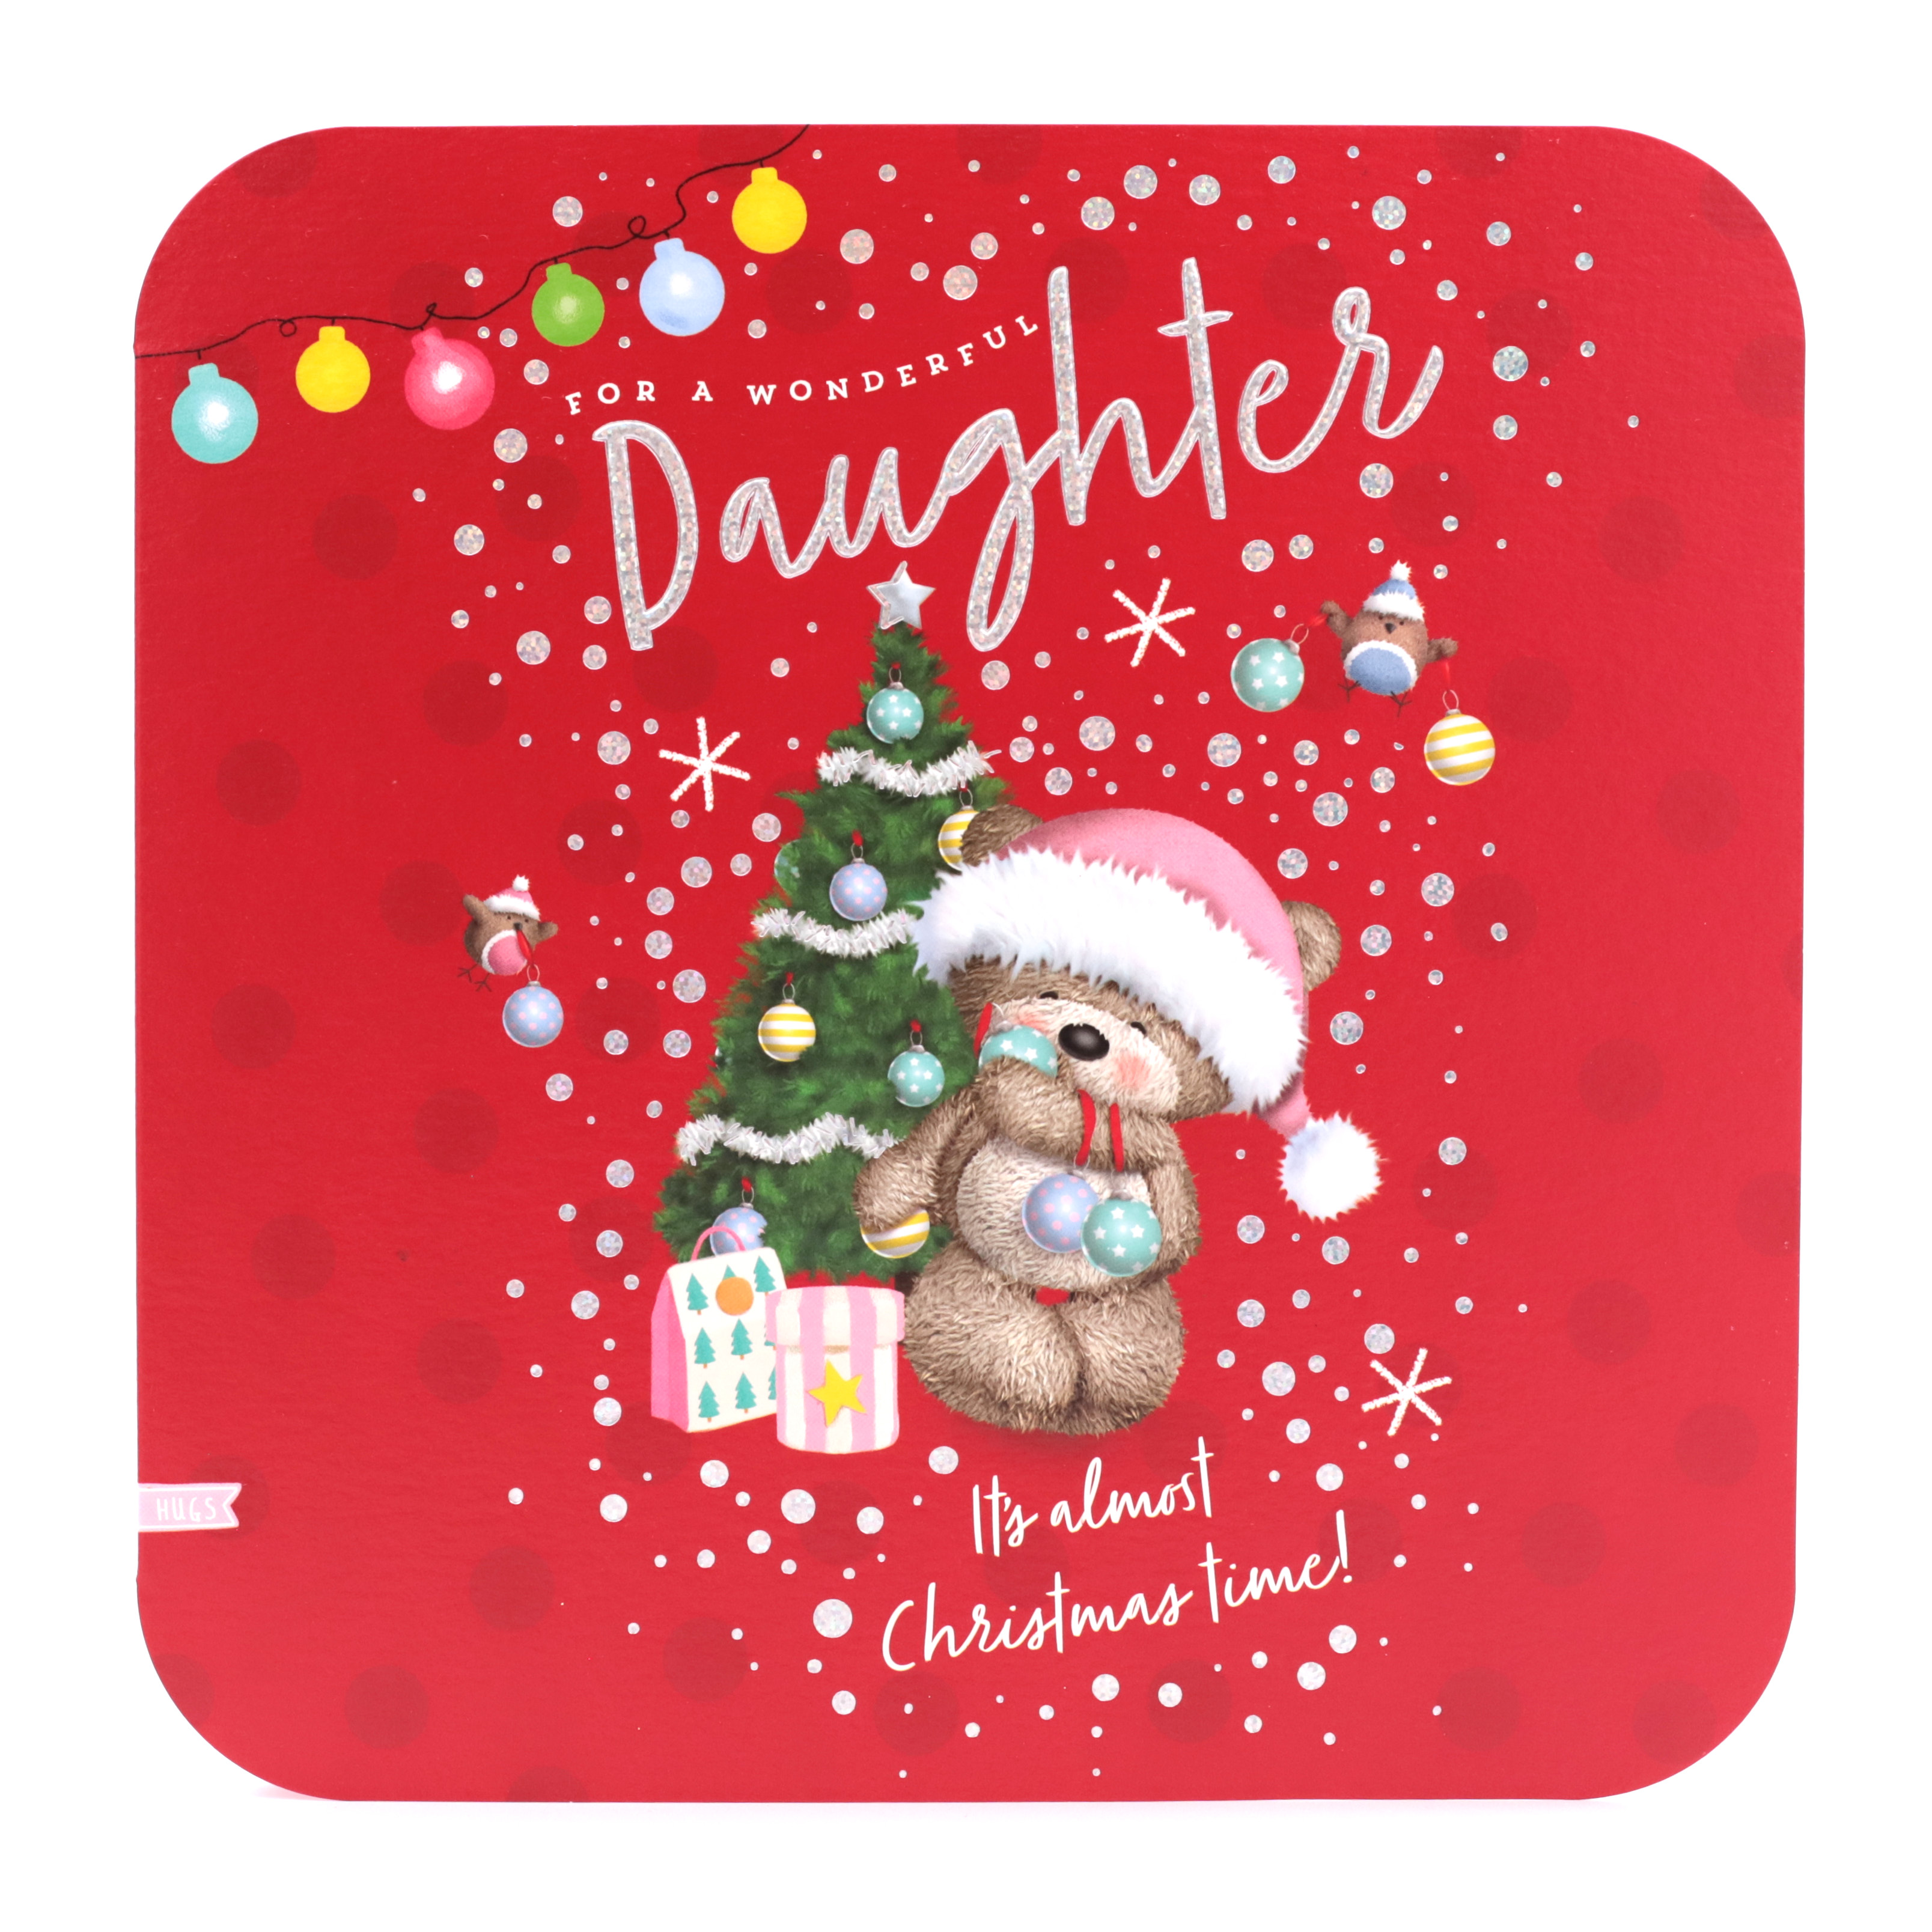 Hugs Bear Christmas Card - Daughter, Hugs Christmas Tree